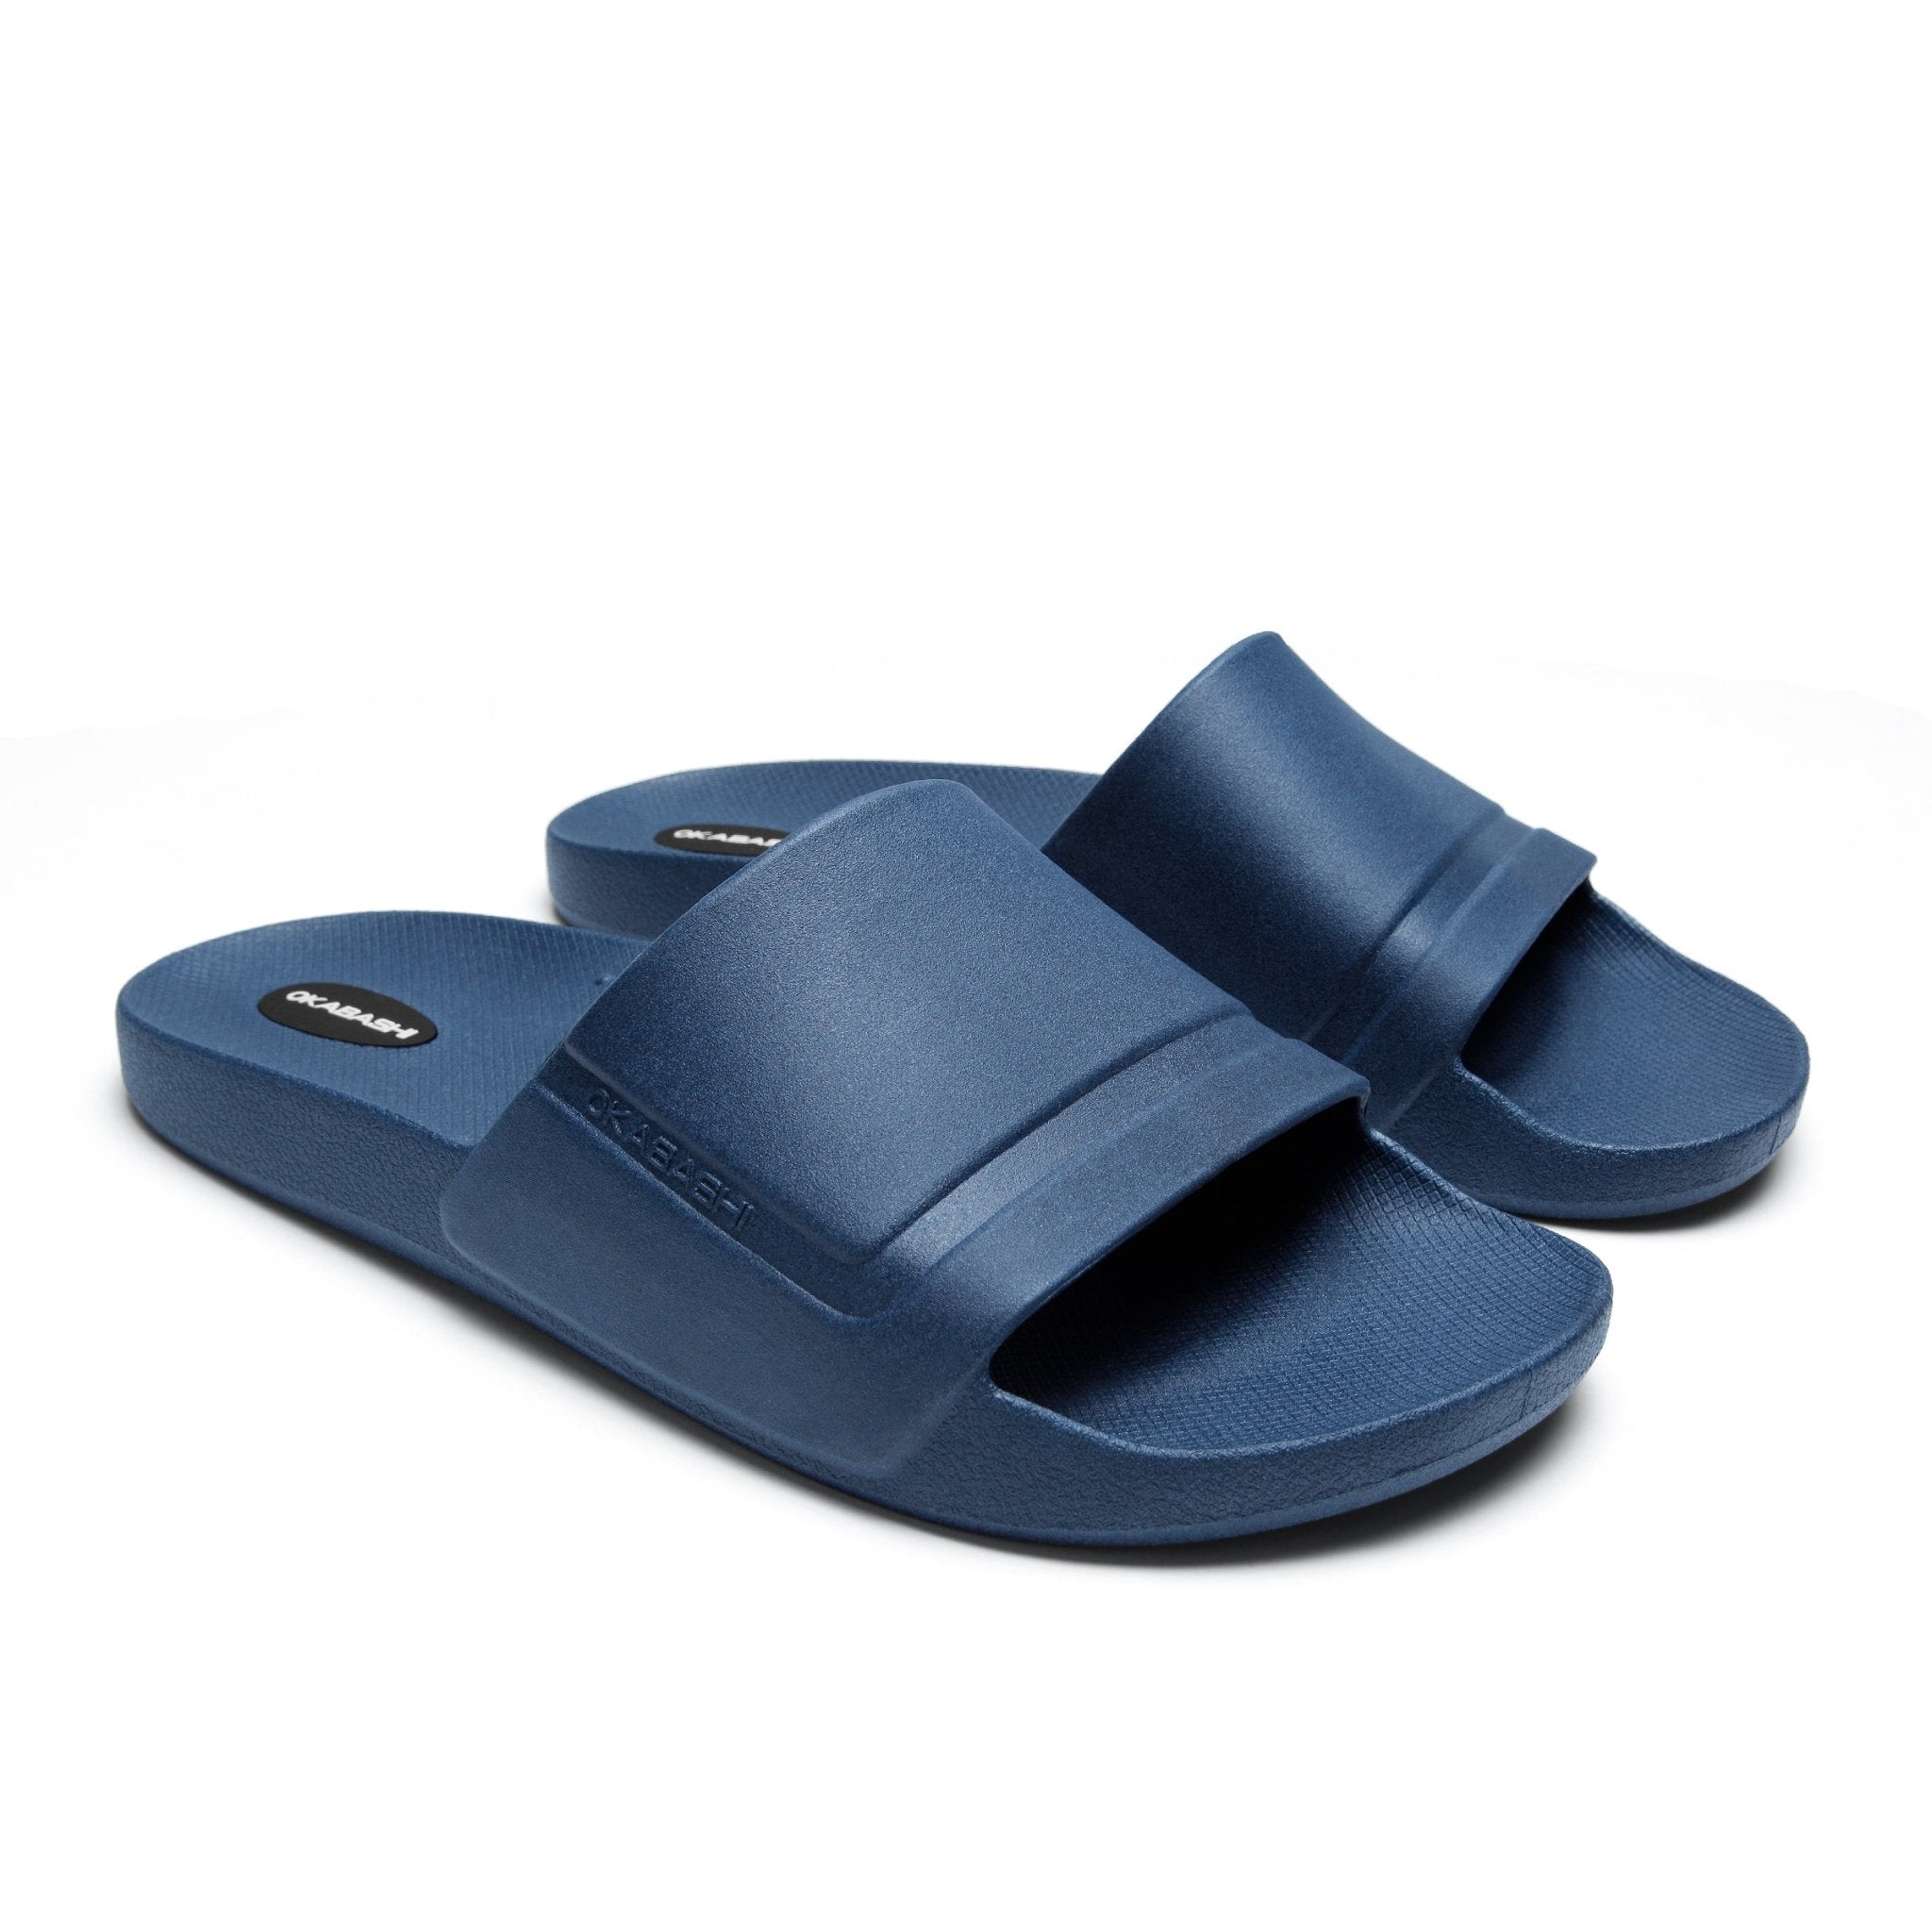 Buy Sandals For Men: Cravt-Gry-Org | Campus Shoes